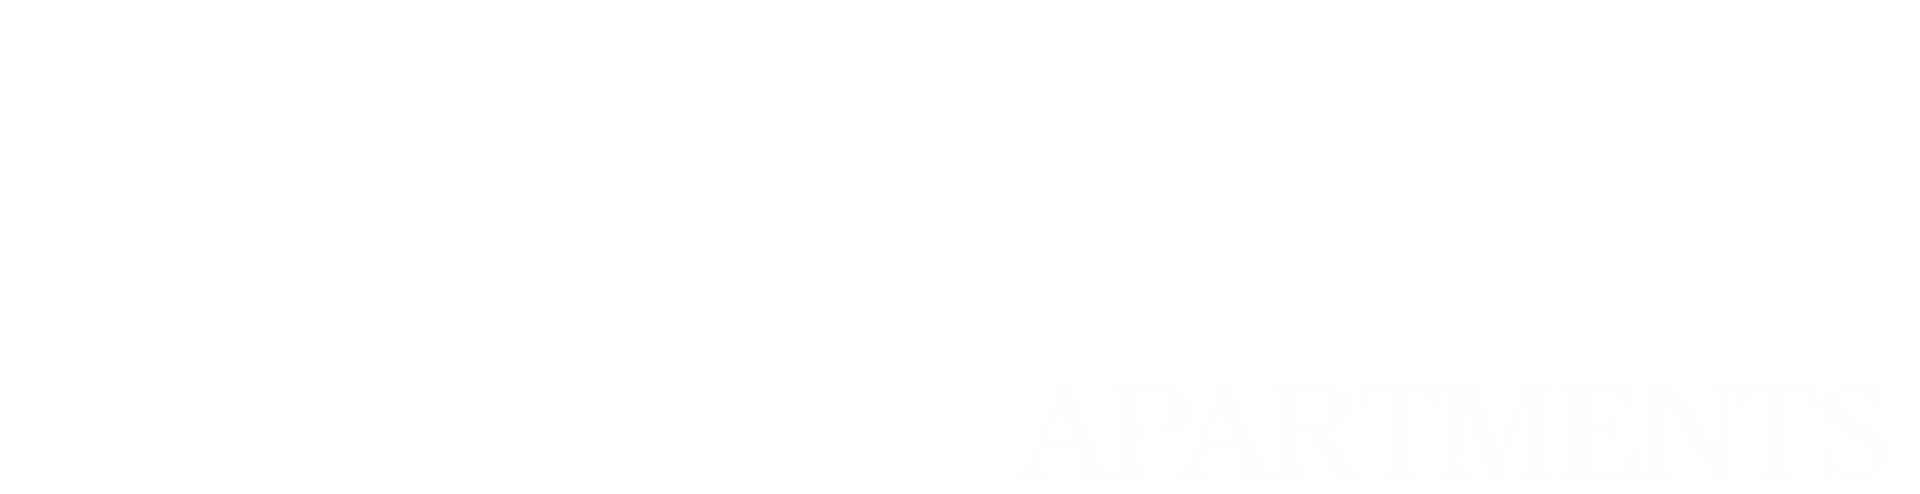 Georgetown Apartments Logo